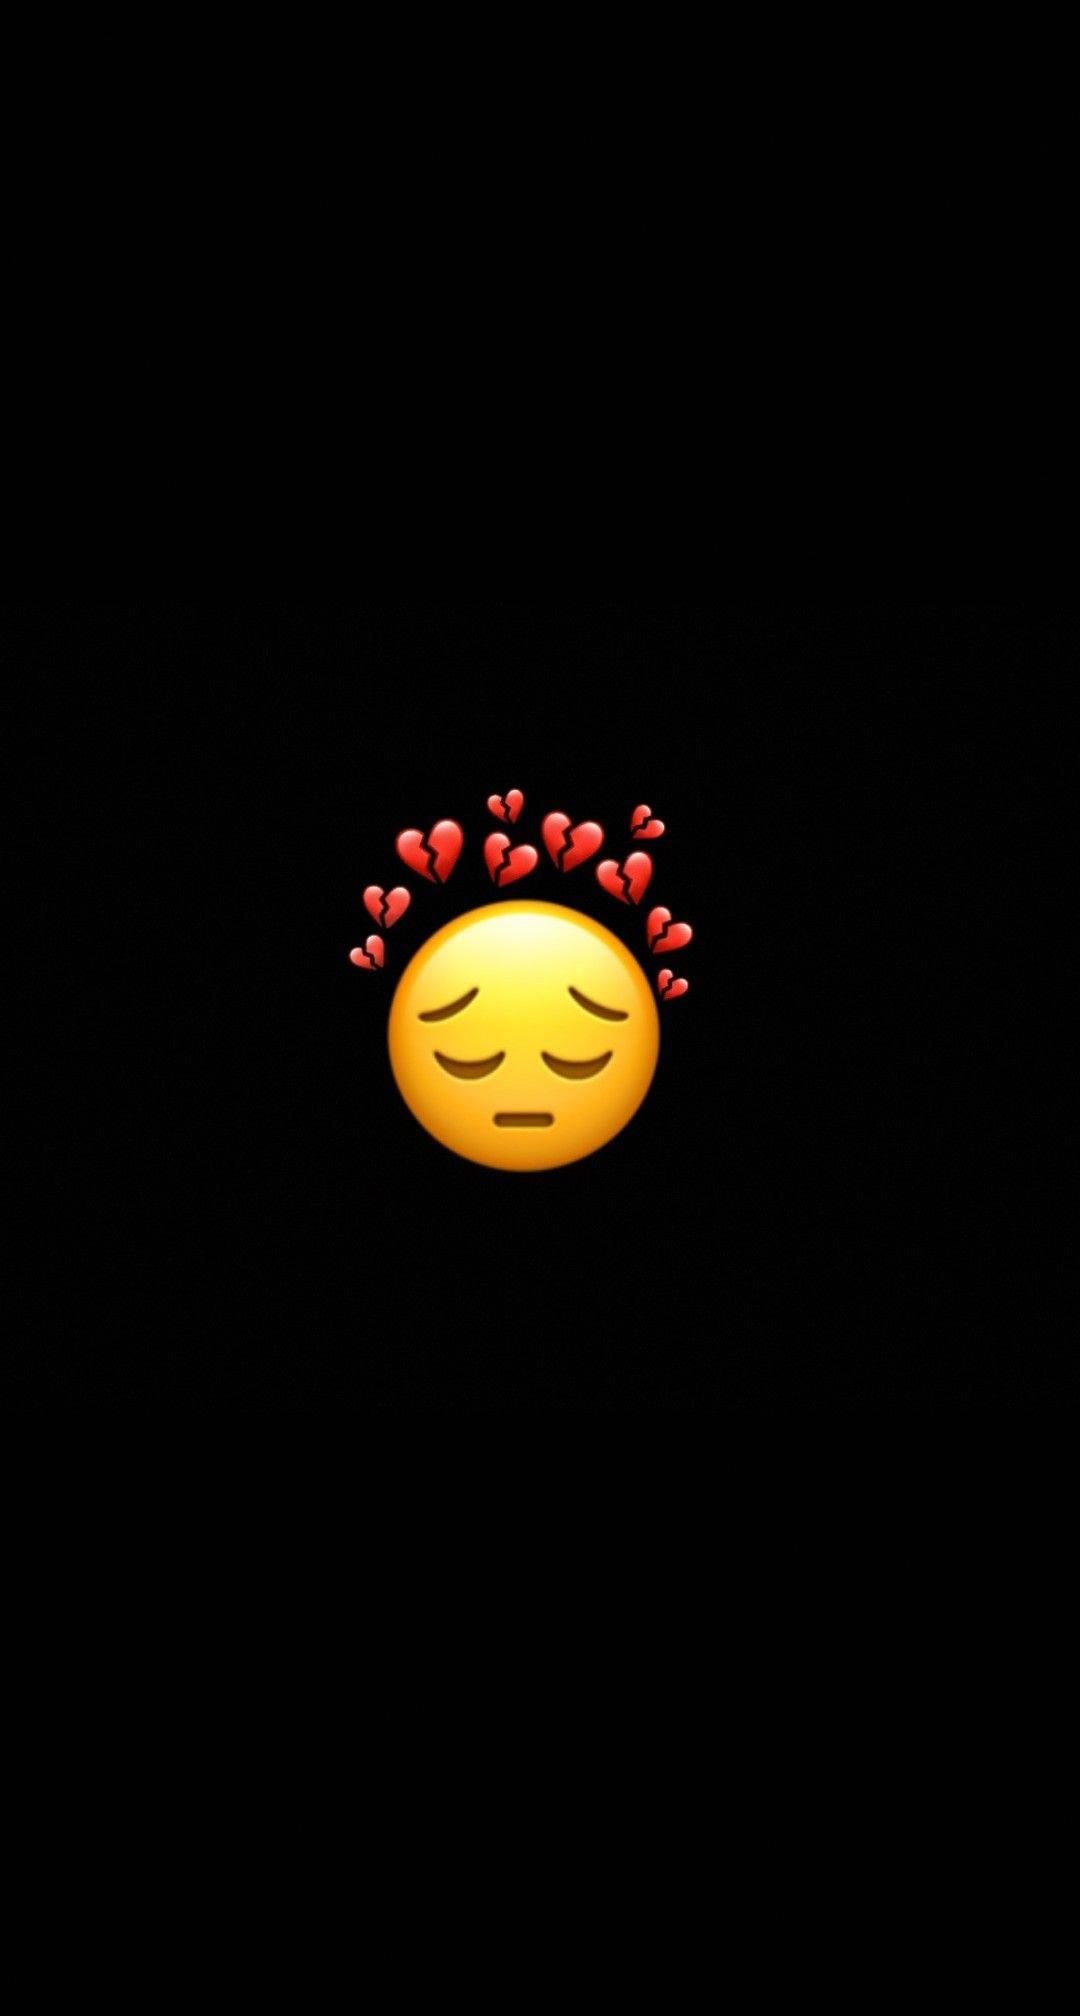 Sad Heartbroken Emoji